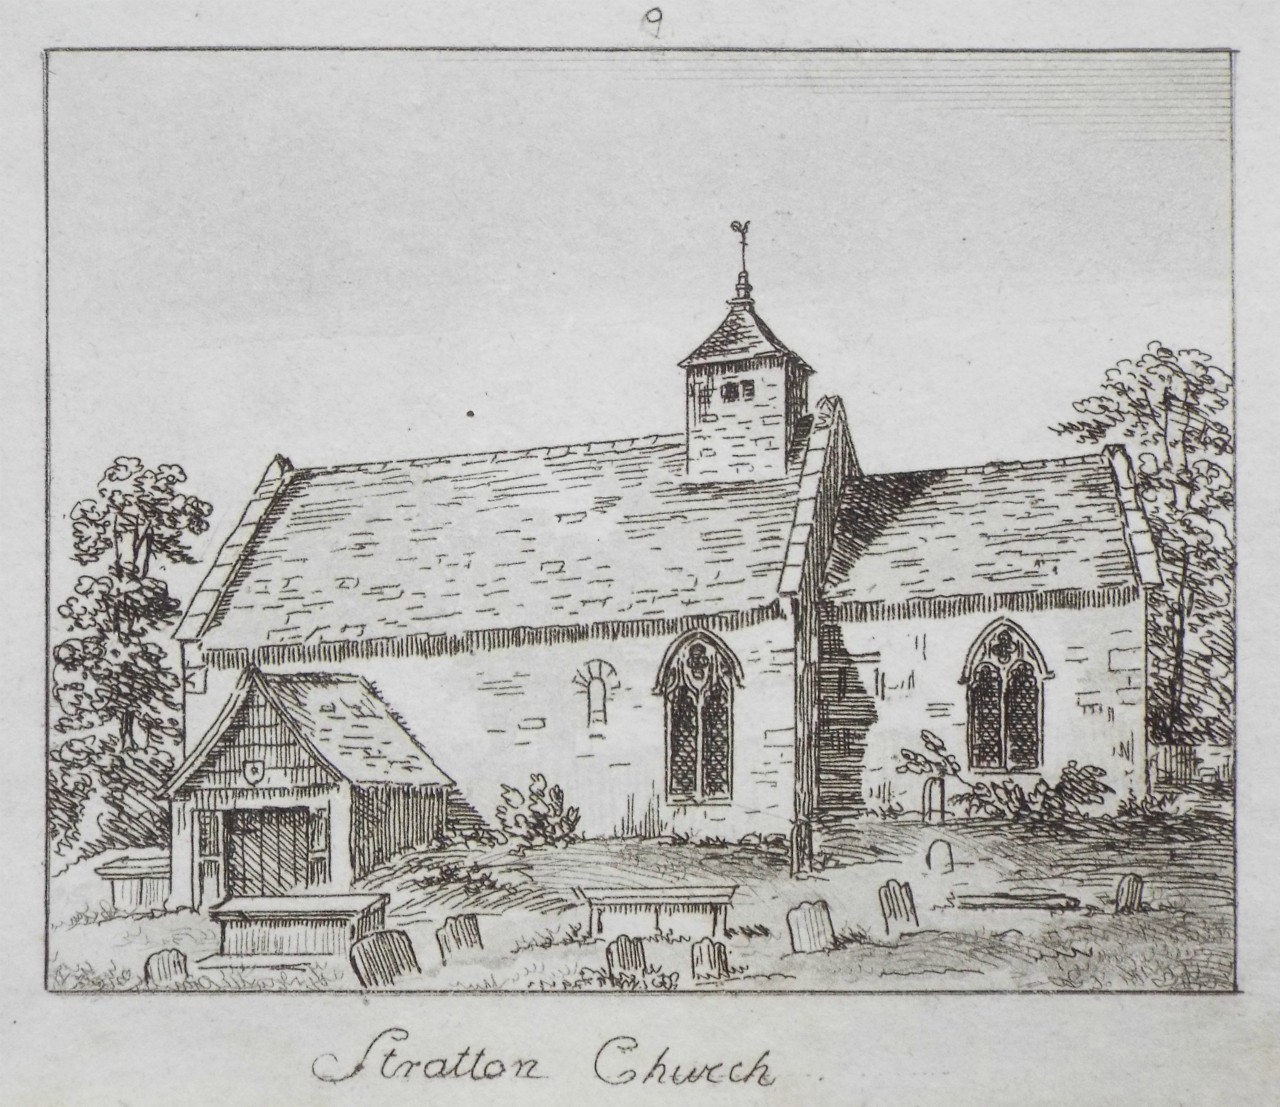 Etching with aquatint - Stratton Church